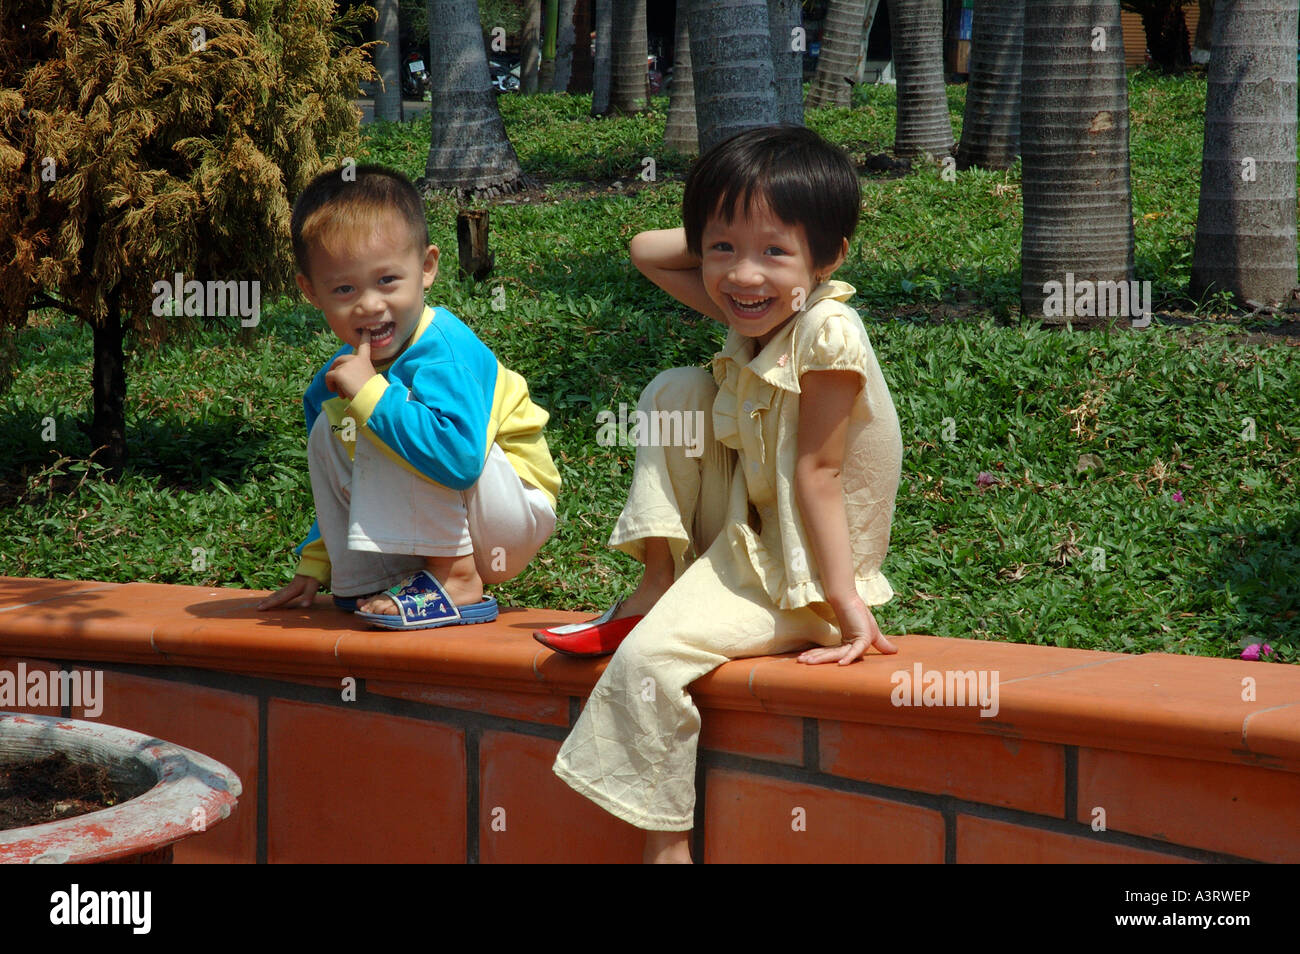 Stock photo of Children in Saigon Vietnam 2005 Stock Photo